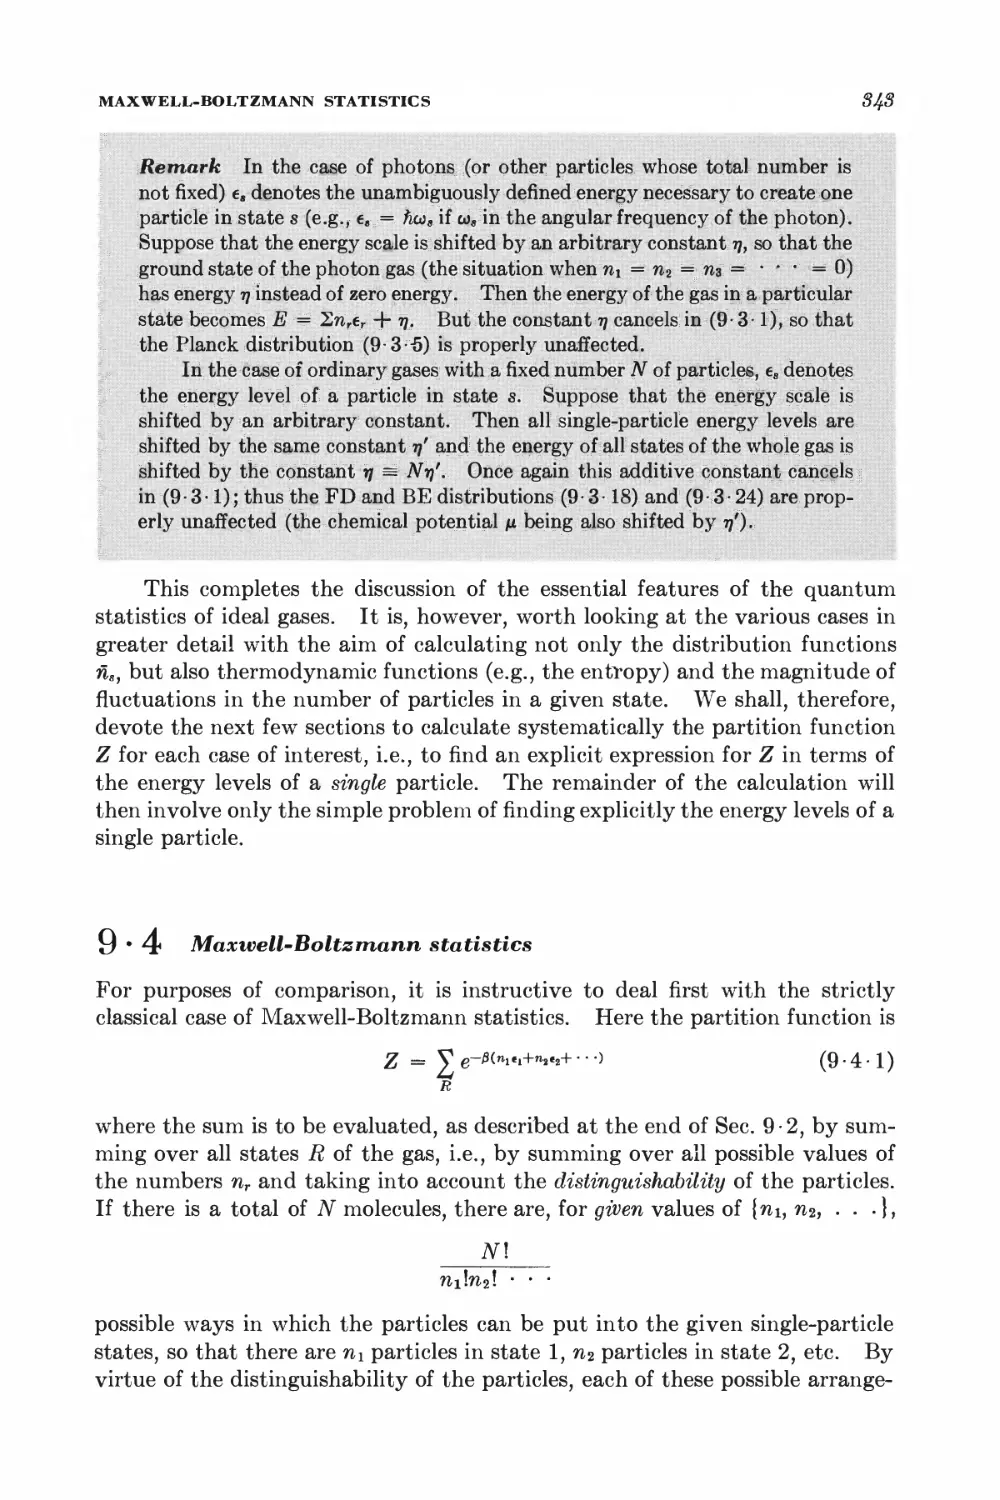 9.4 Maxwell-Boltzmann statistics